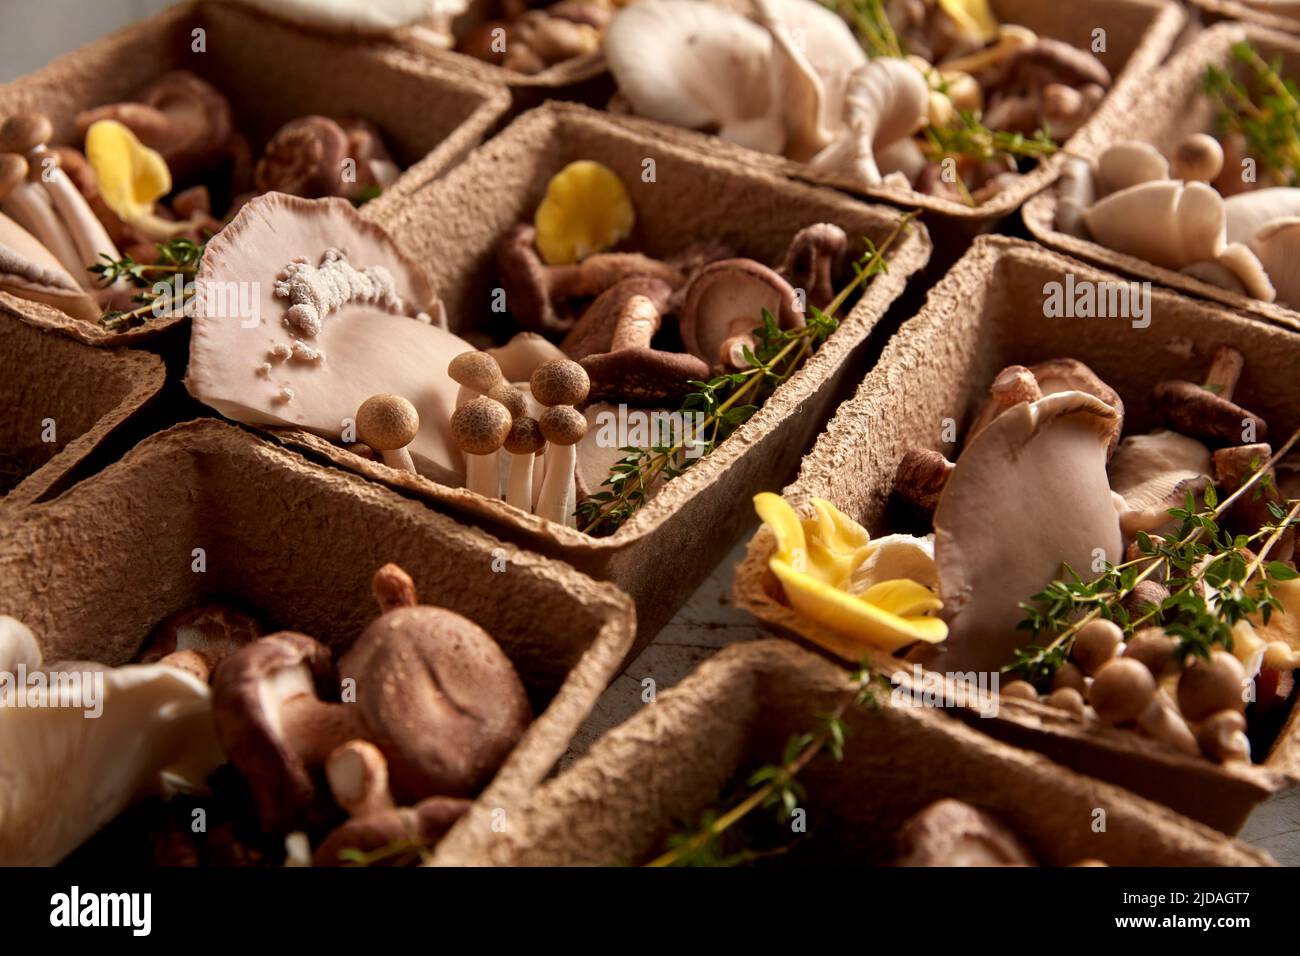 Champignons comestibles disposés dans des boîtes en carton, champignons comestibles cultivés à un fongium. Banque D'Images